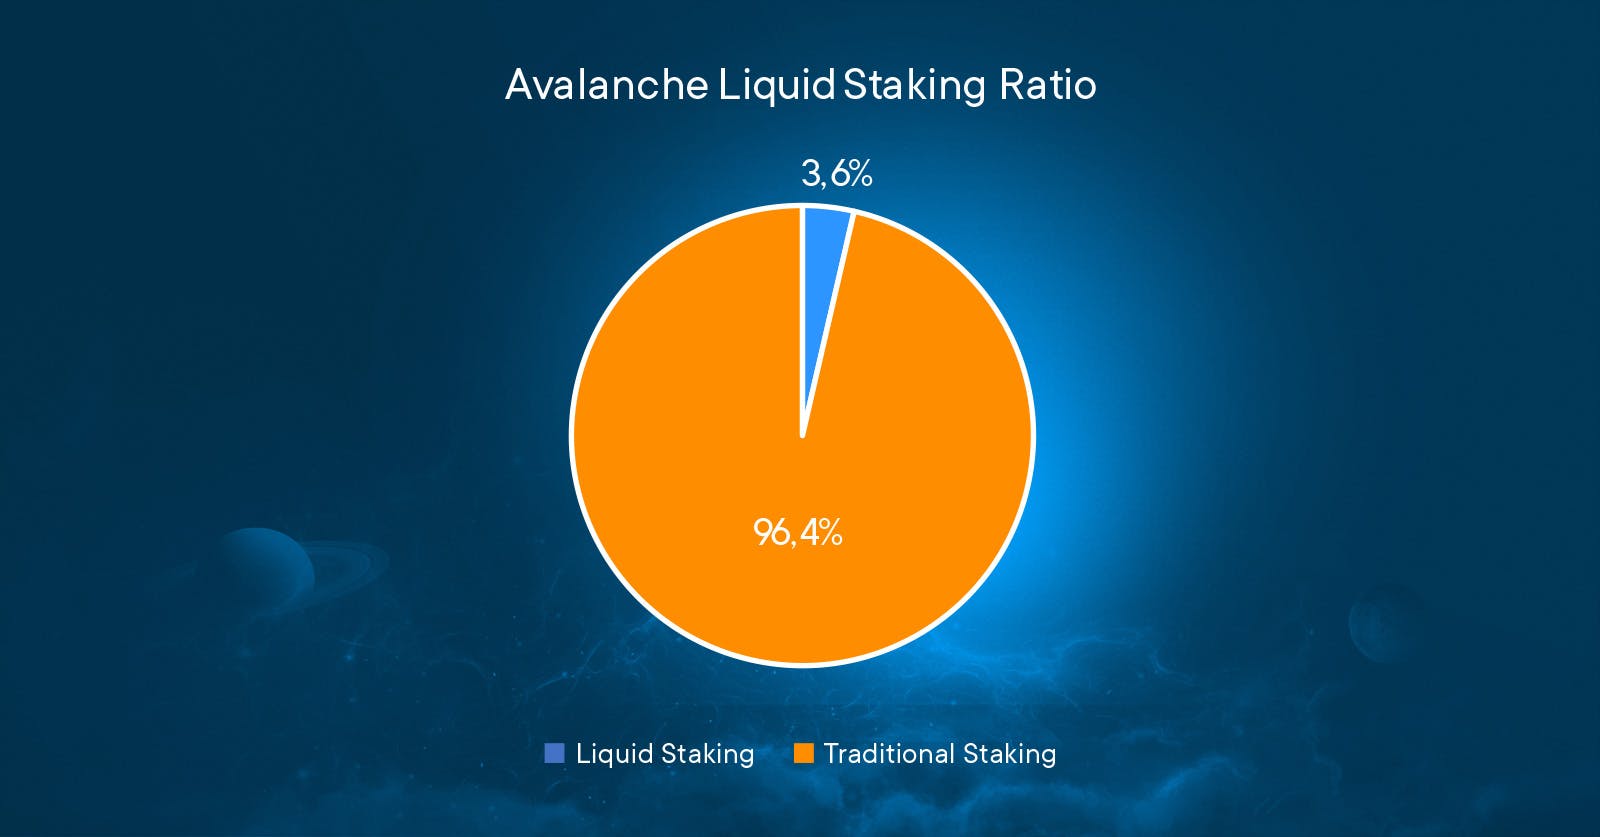 Avalanche liquid staking ratio